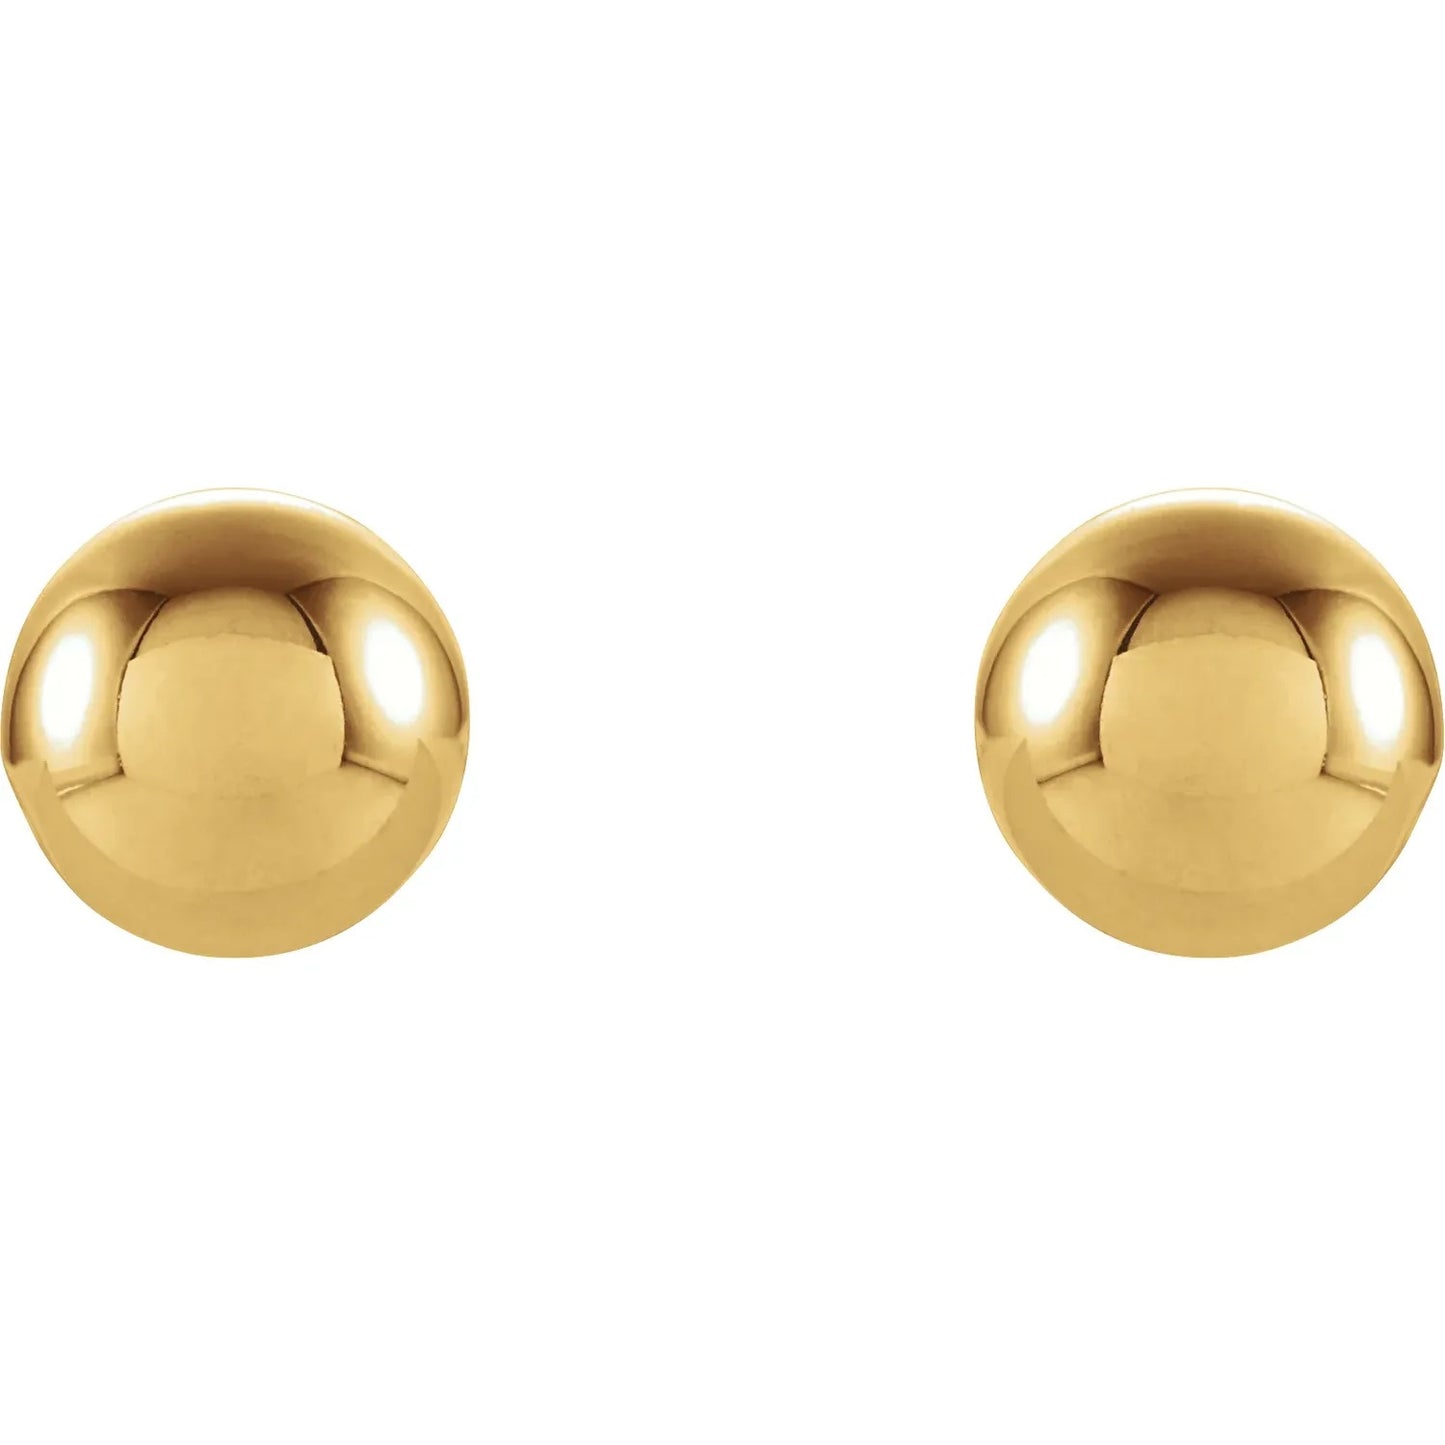 5mm Yellow Gold Ball Stud Earrings